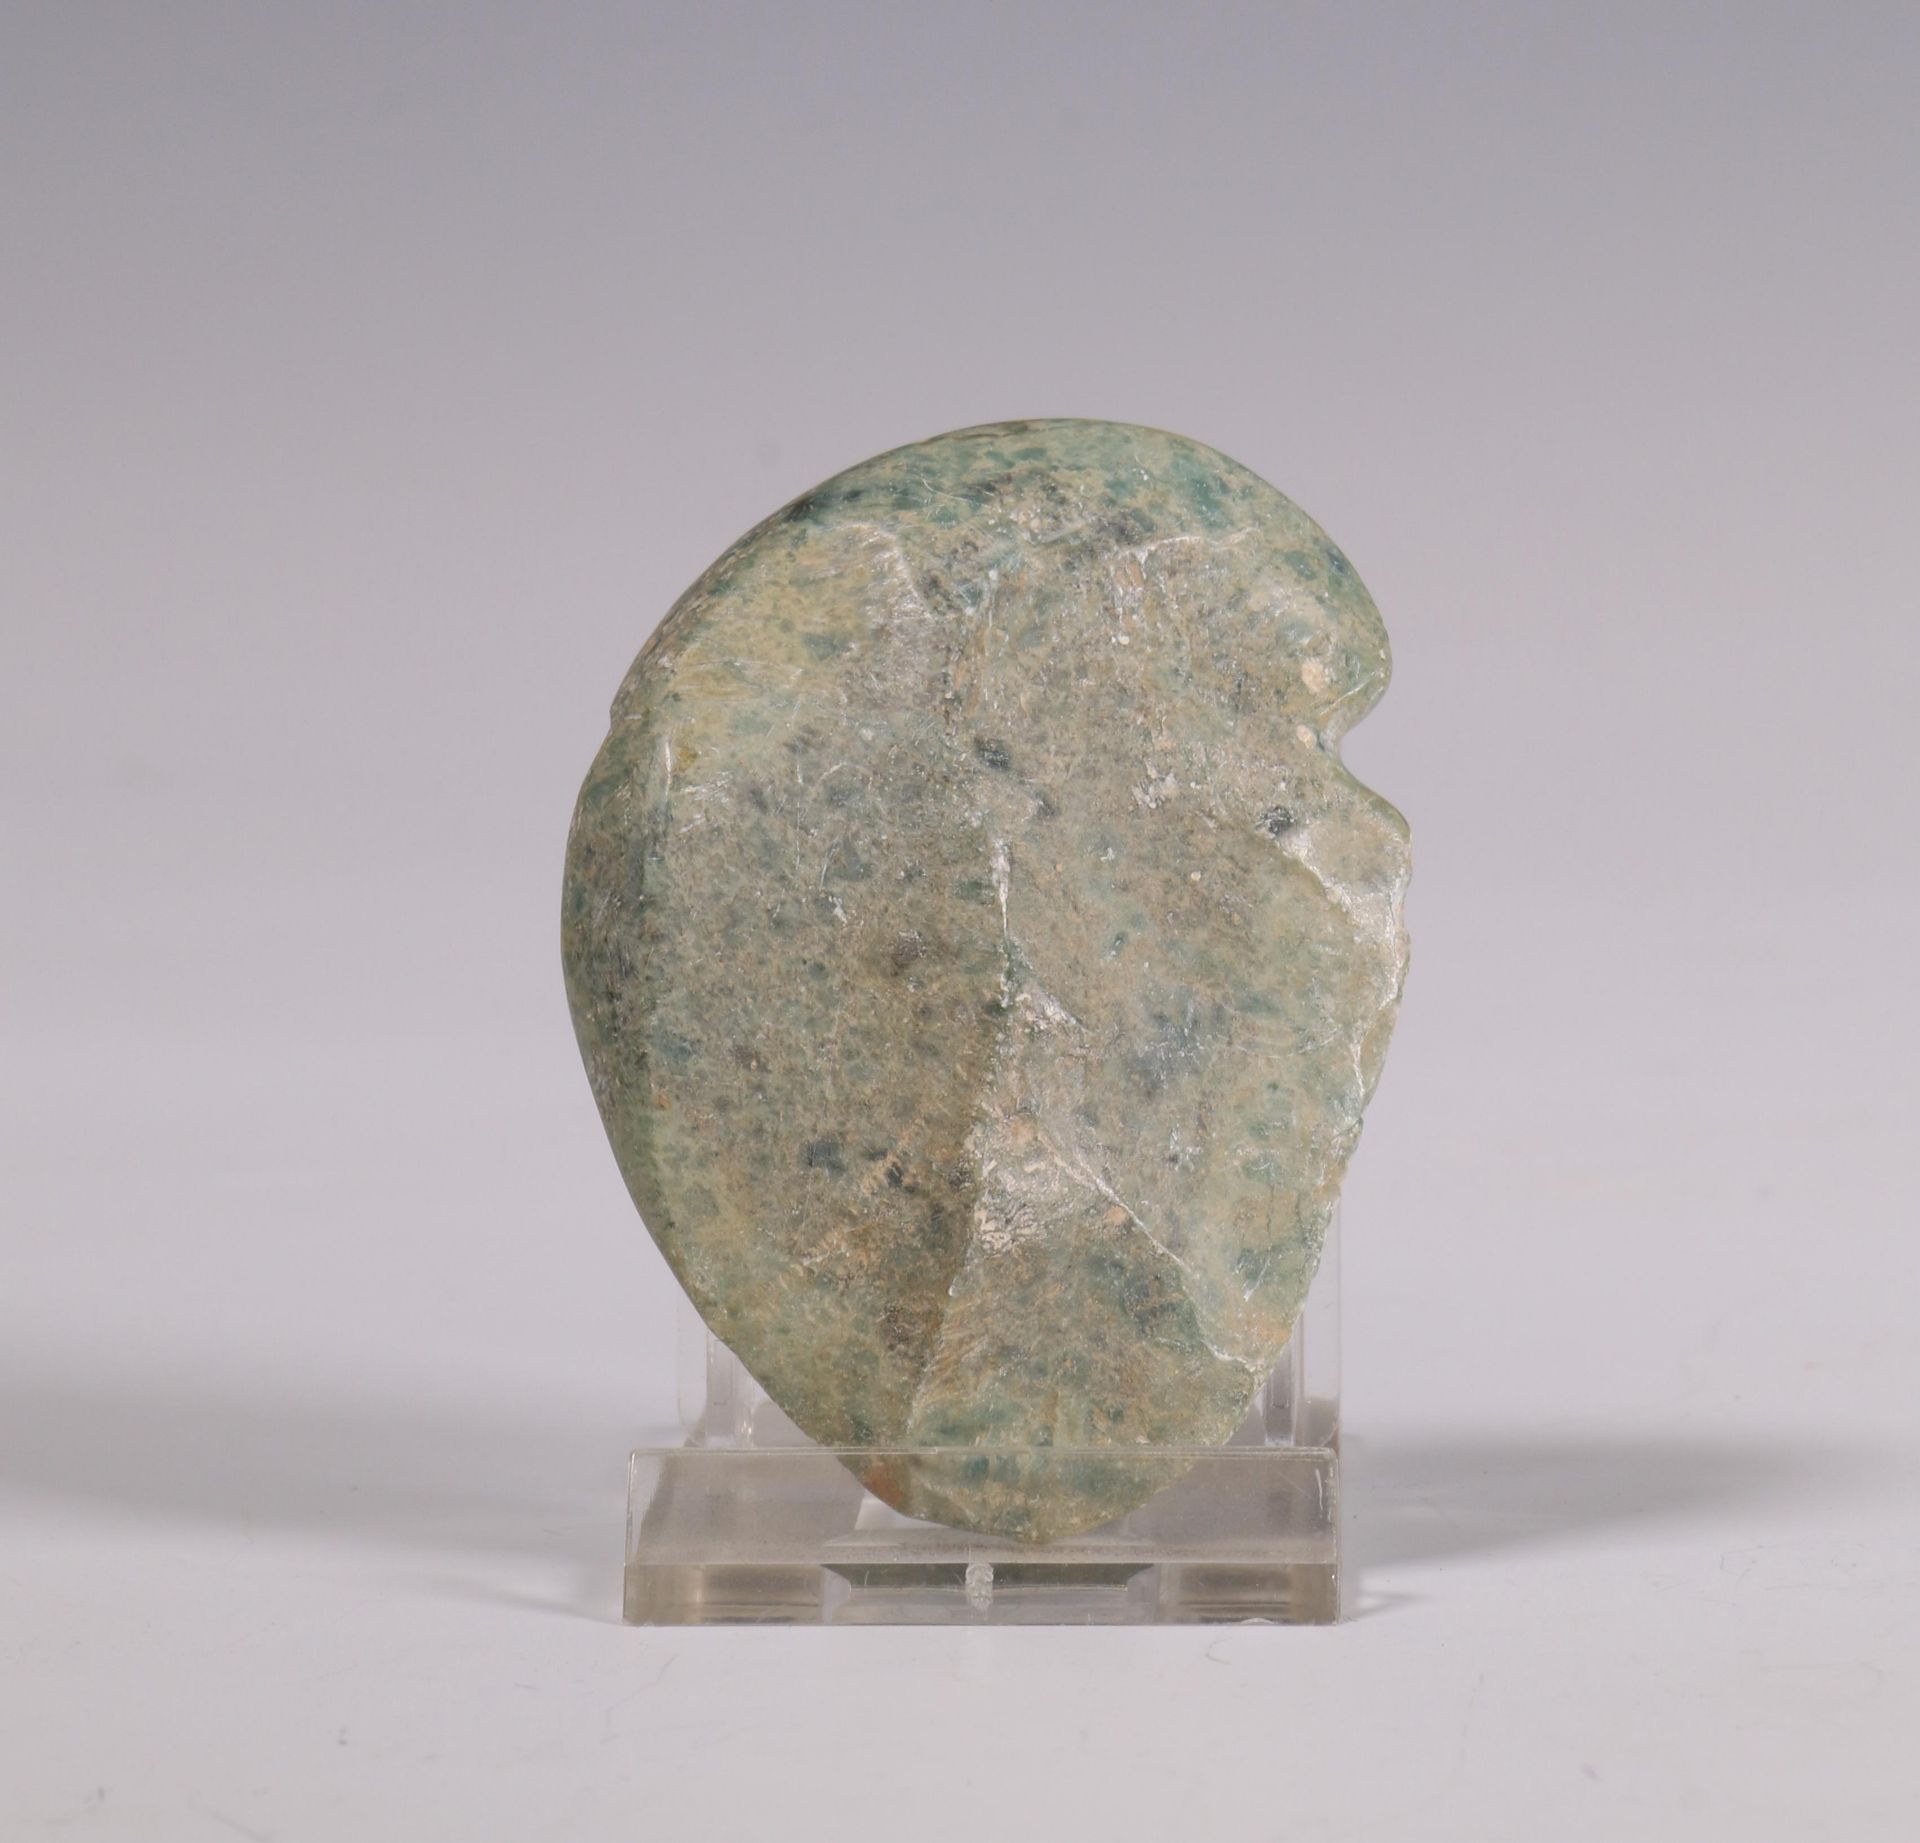 Central Americas - Honduras, a green jadeiet stone amulet, possibly Olmec, 500 BC. - Image 2 of 2